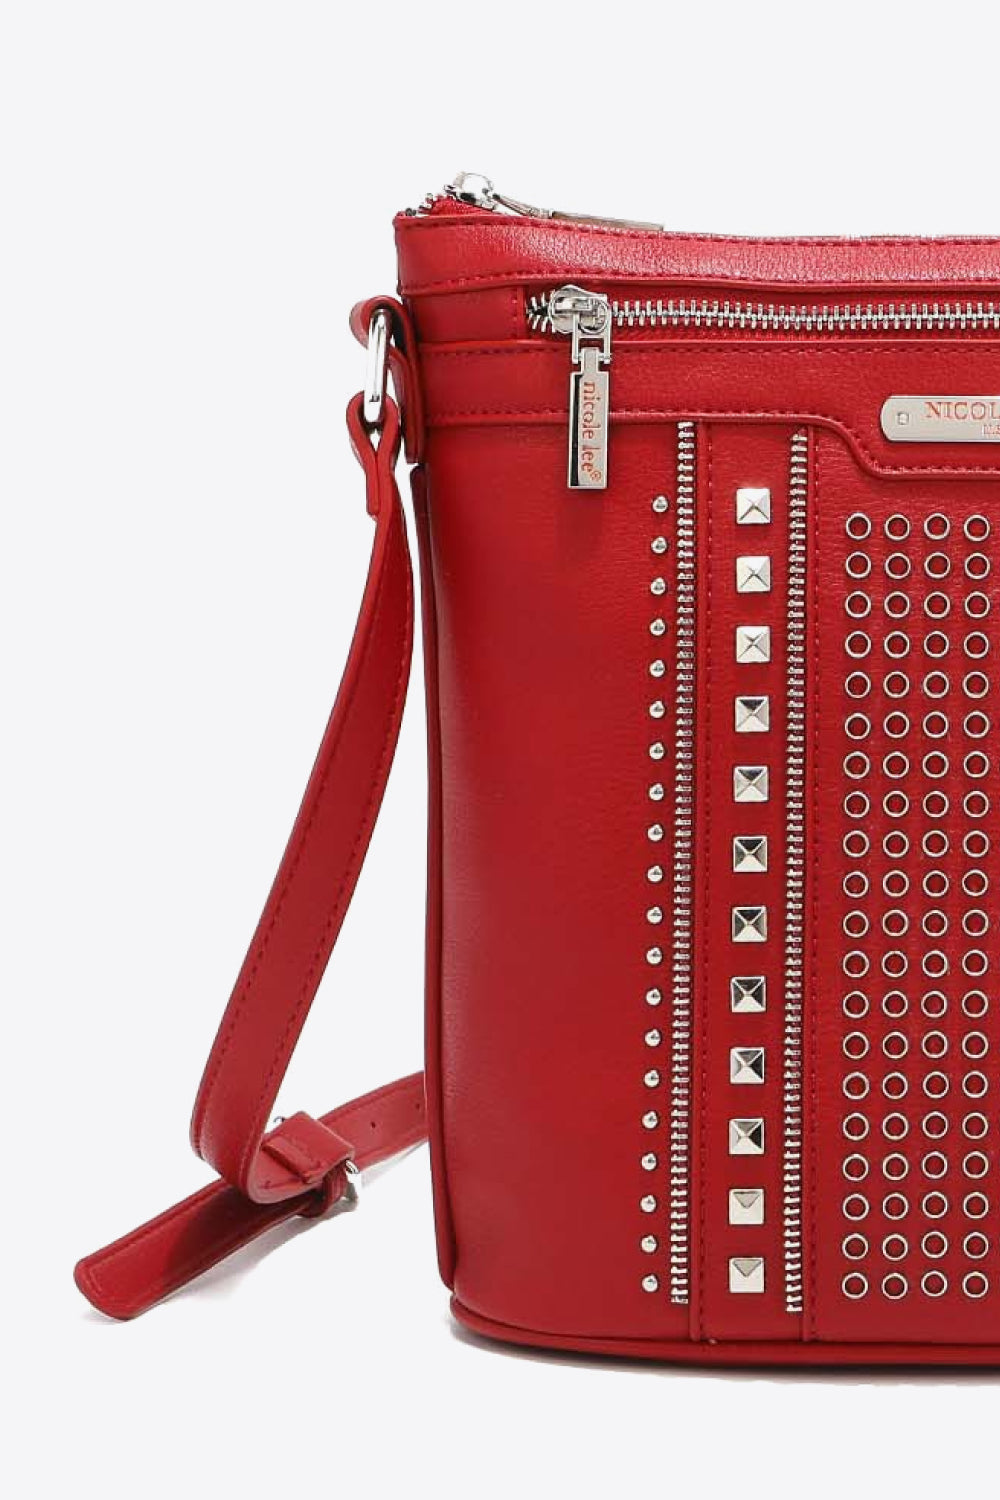 Nicole Lee USA Love Handbag Bags & Luggage - Women's Bags - Top-Handle Bags RYSE Clothing Co.   